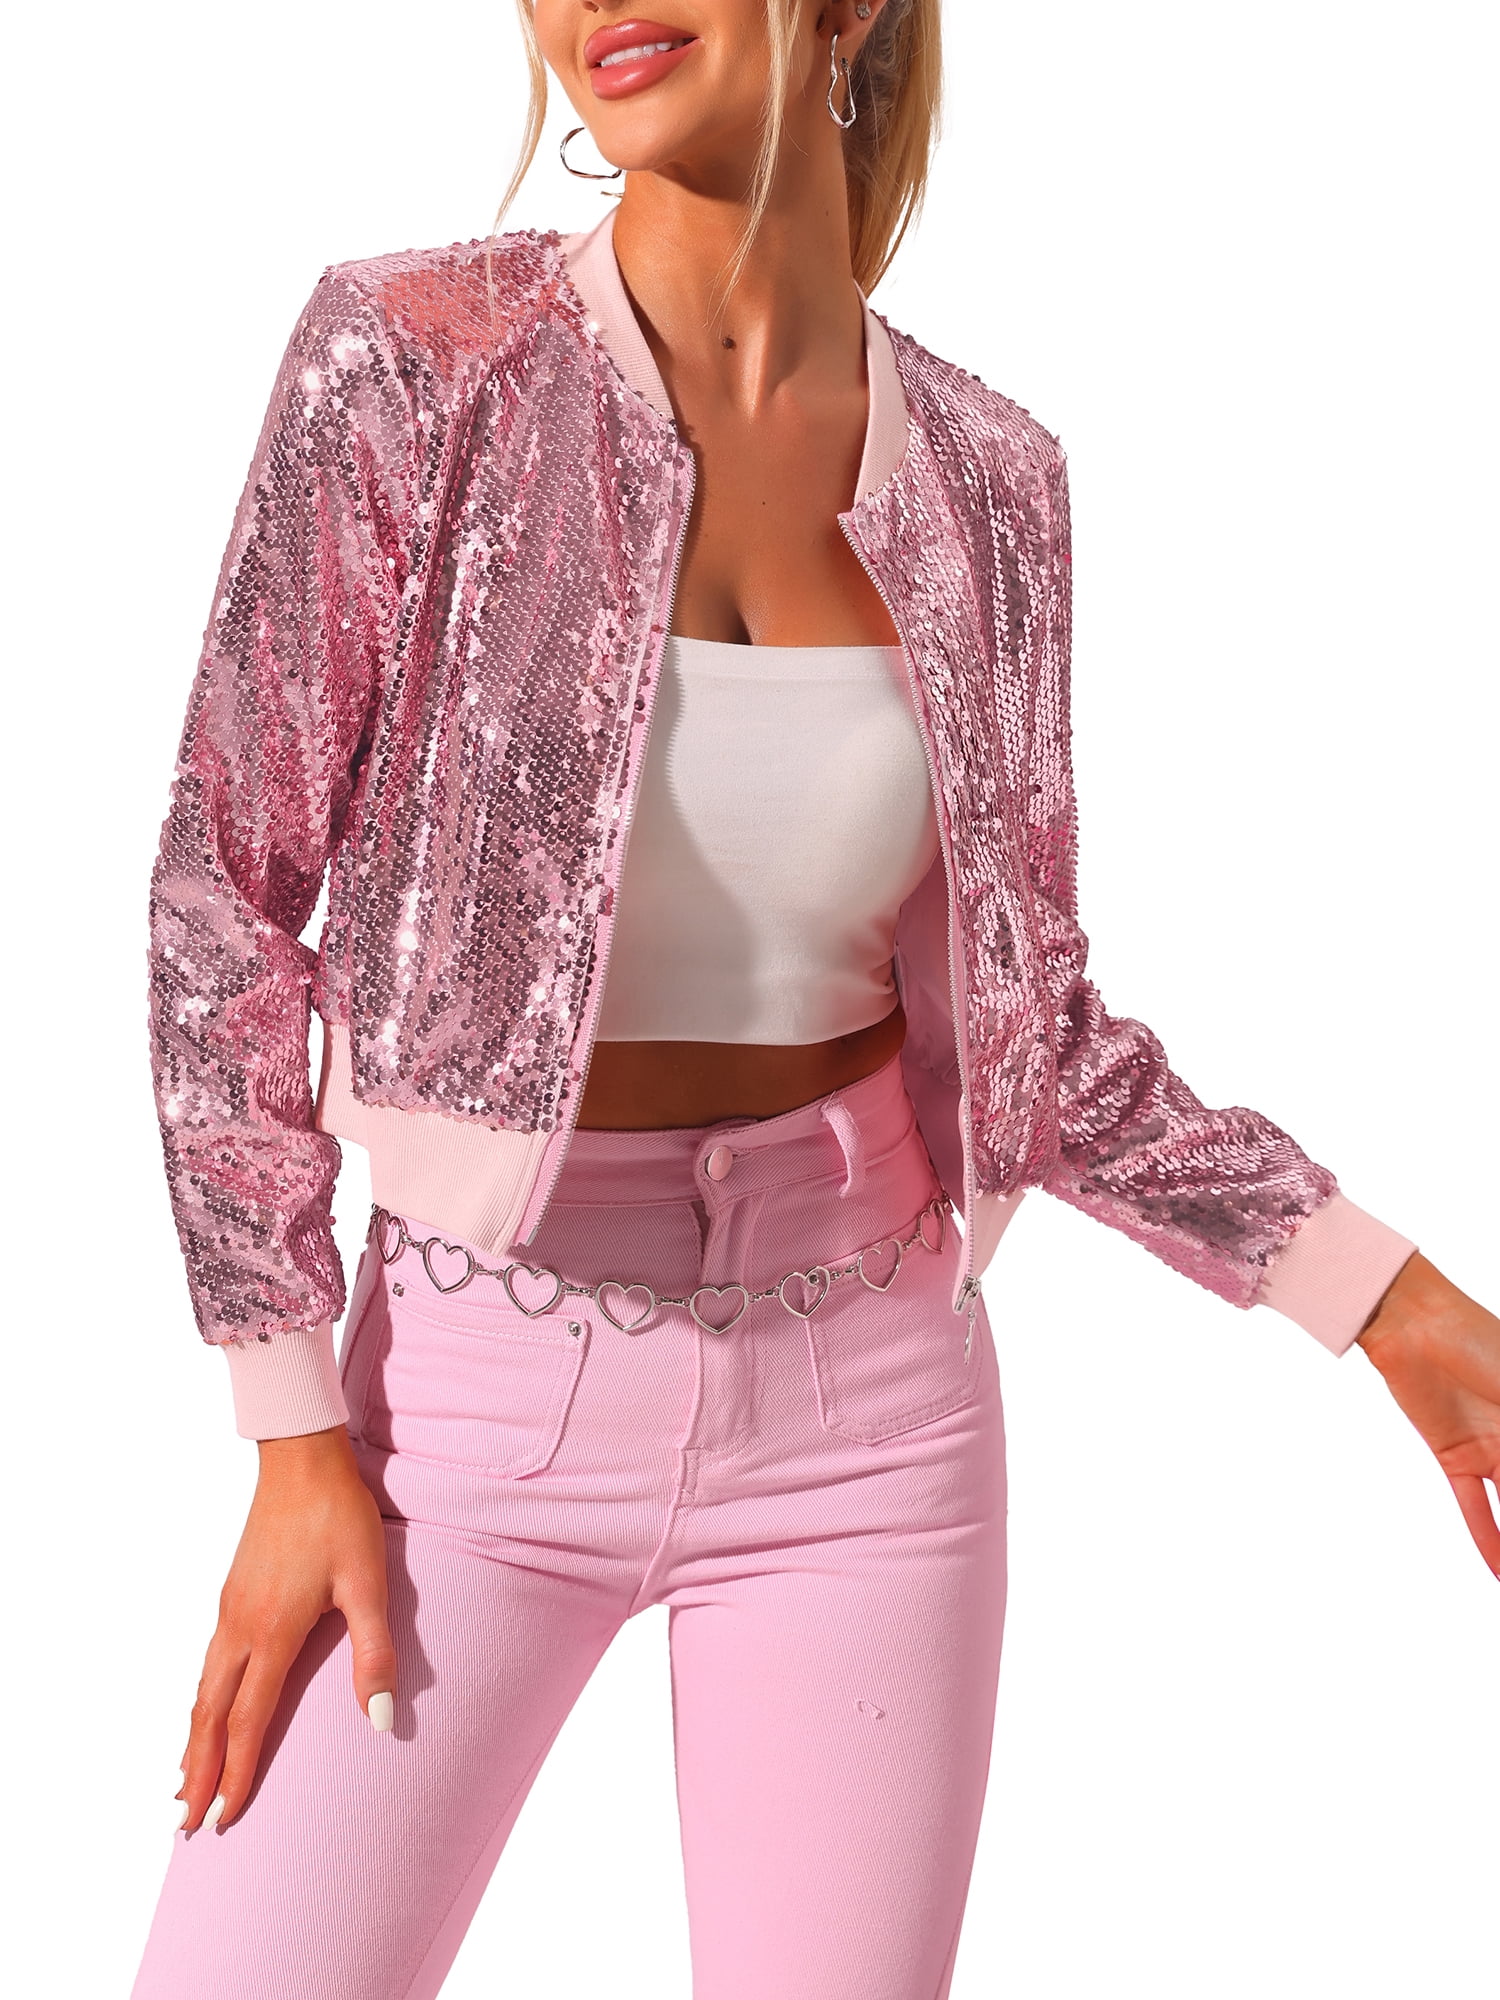  Hemlock Women Concert Jackets Sequins Glitter Tops Zip Up  Bomber Jacket Short Outwear Tops for Show Party : Sports & Outdoors